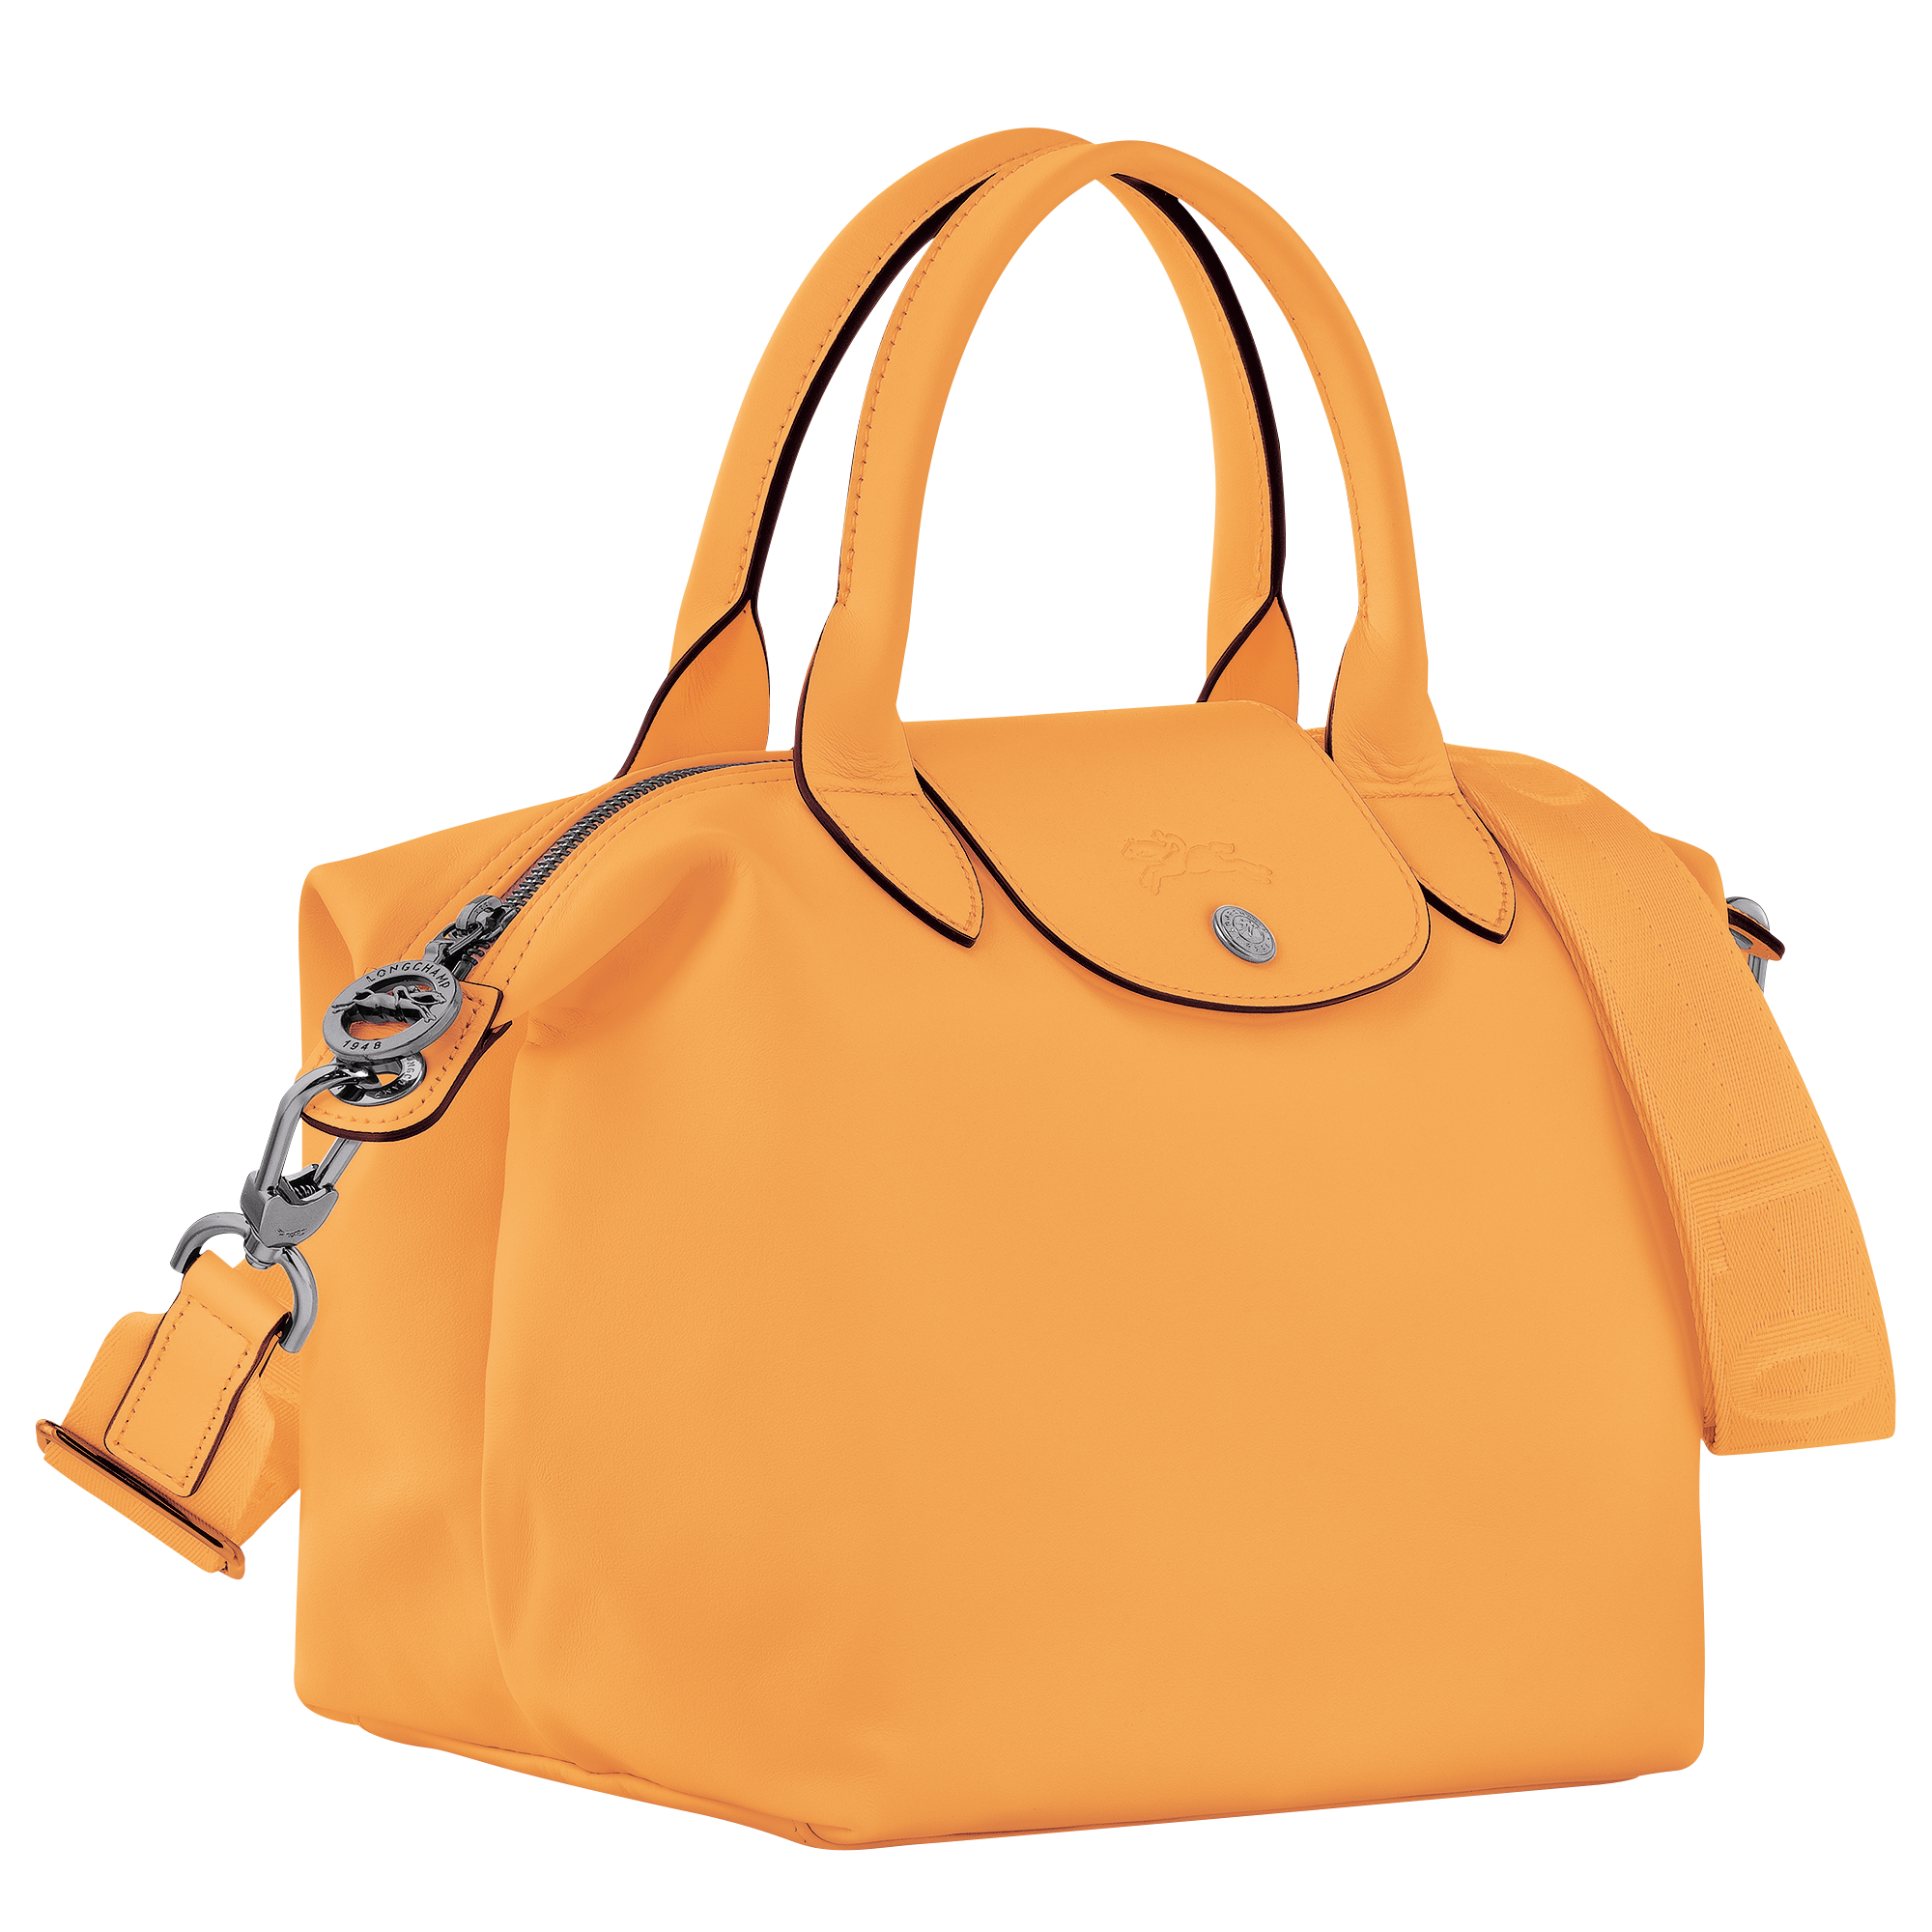 Le Pliage Xtra Handbag S, Apricot